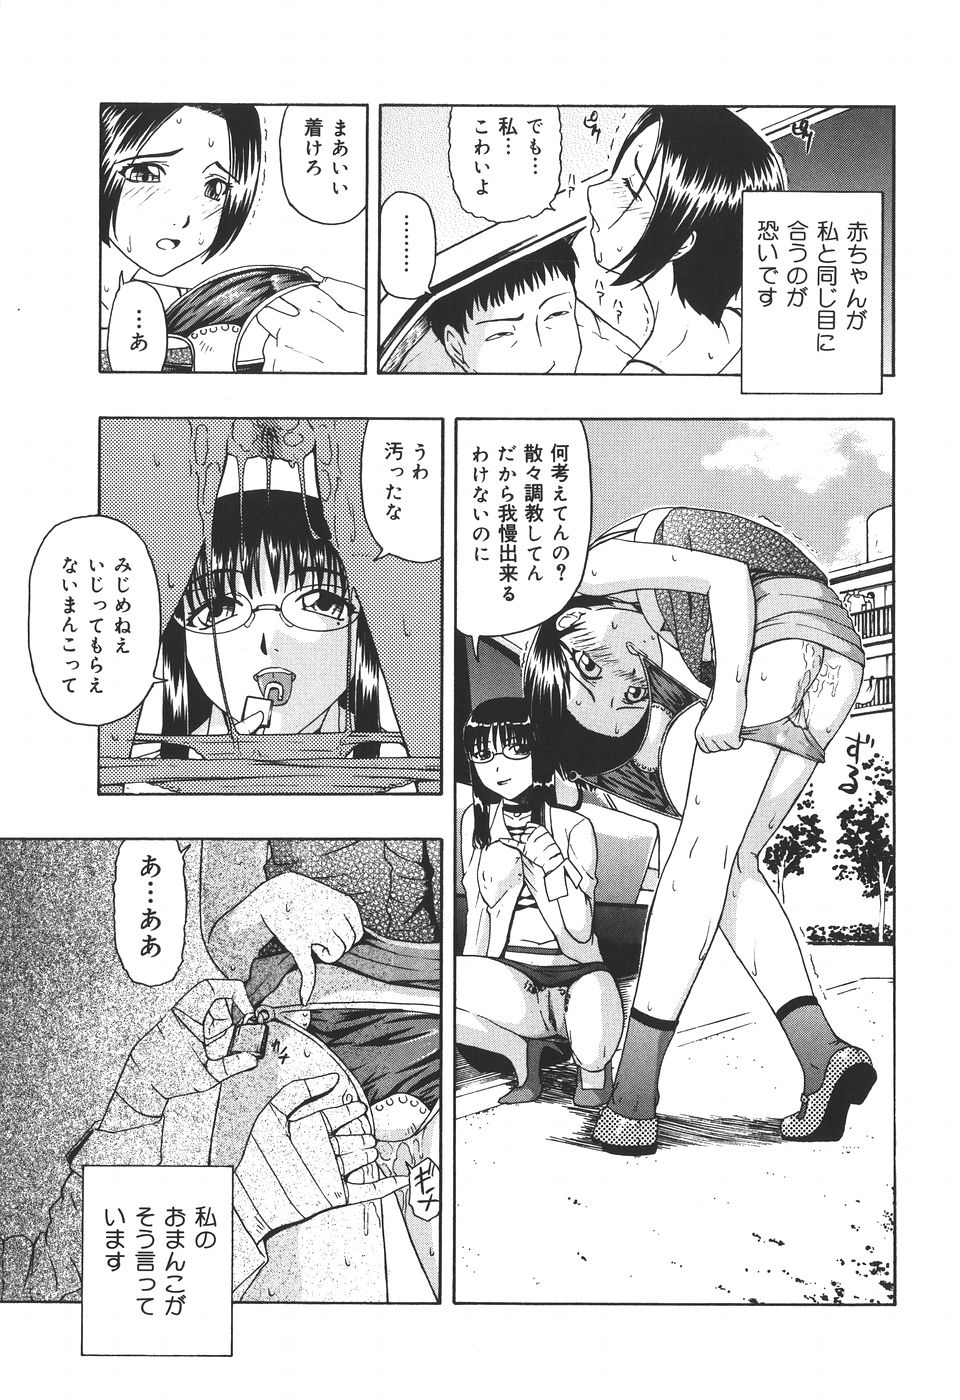 Oyster - Shoujo Jigoku vol.4 (Girls in Hell vol.4)